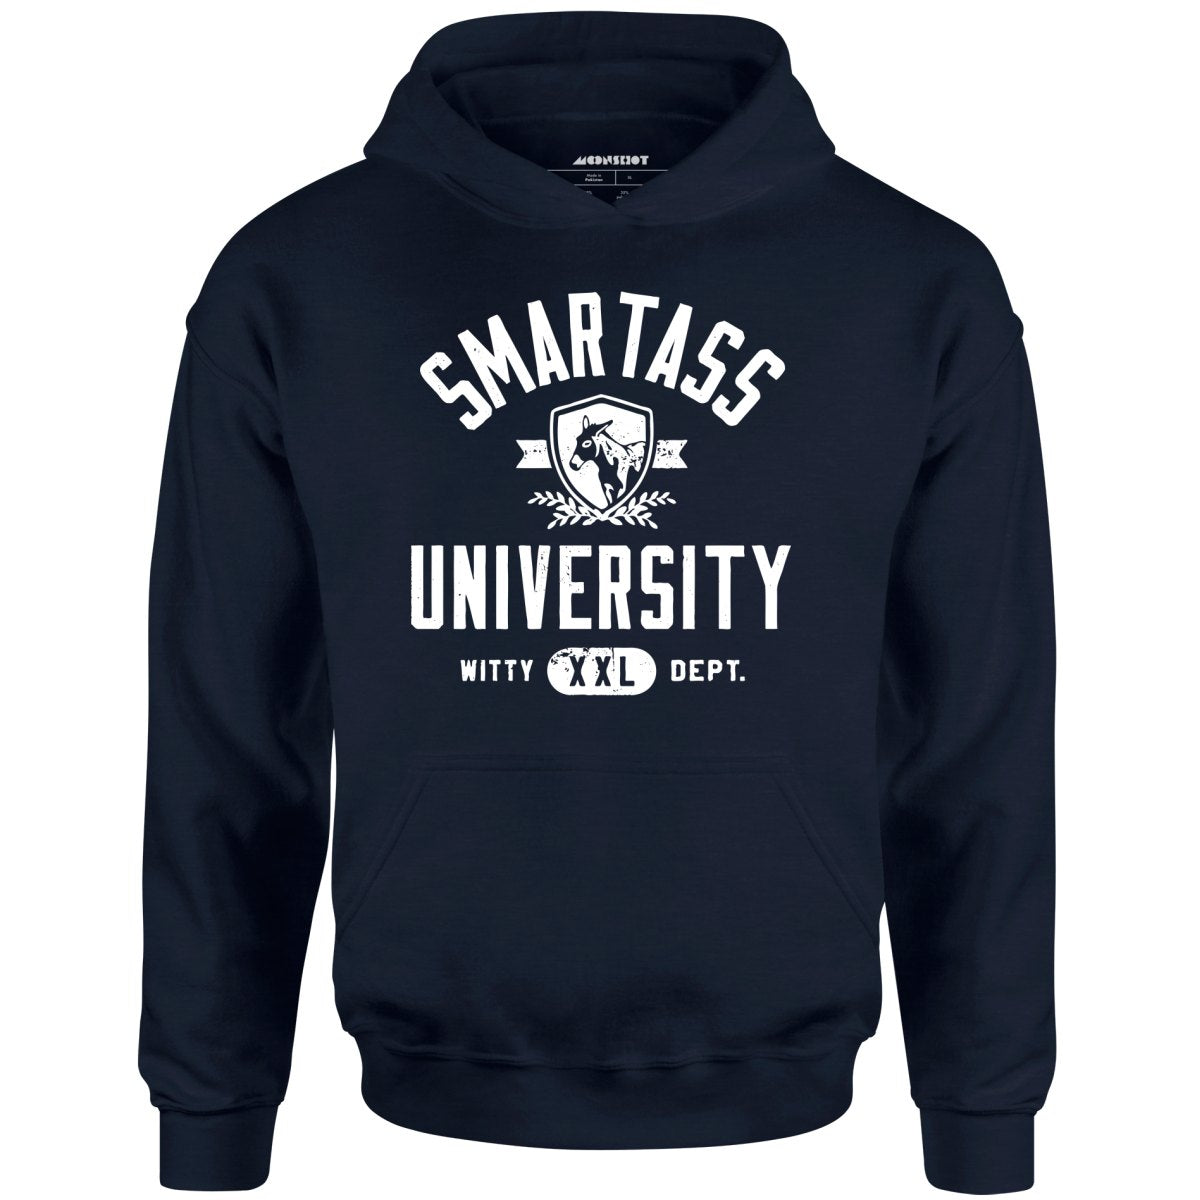 Smartass University - Unisex Hoodie